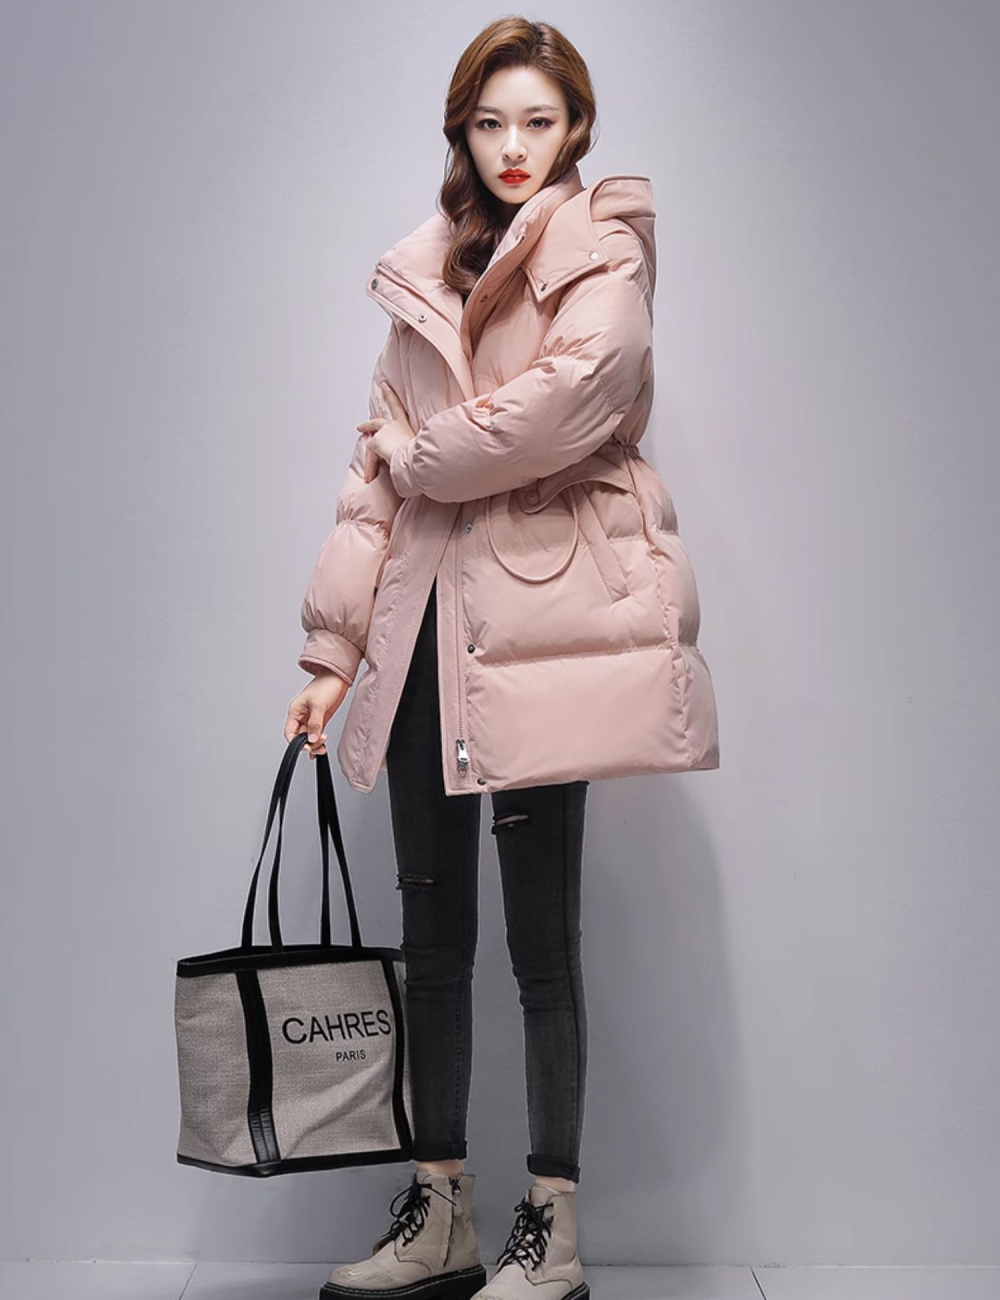 Thick long coat slim winter down coat for women